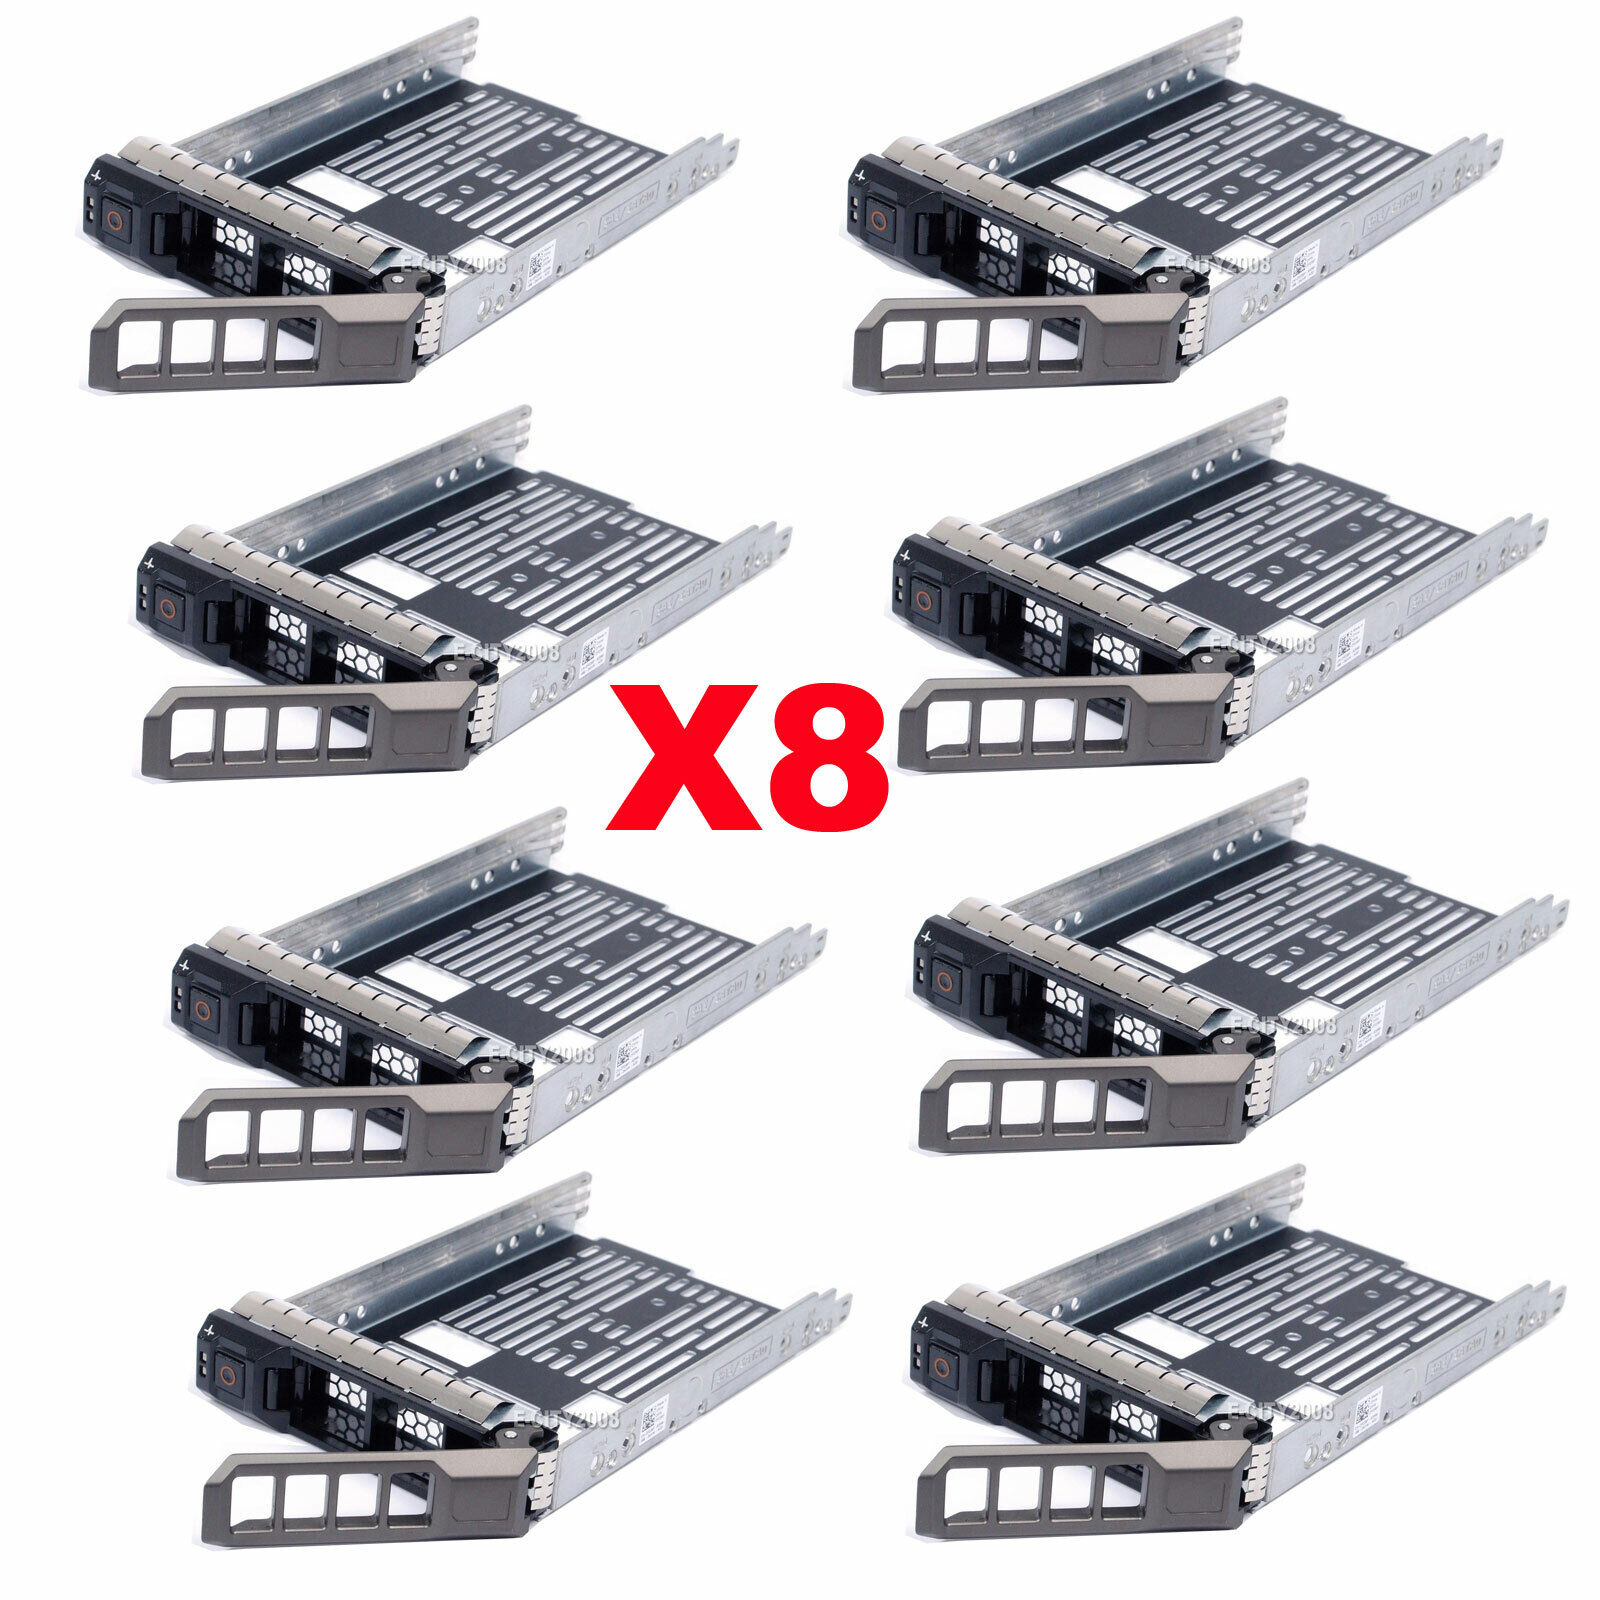 Lot of 8, 3.5" LFF SATA SAS Hard Drive Tray Caddy For Dell PowerEdge R720 R720xd Unbranded F238F 0F238F